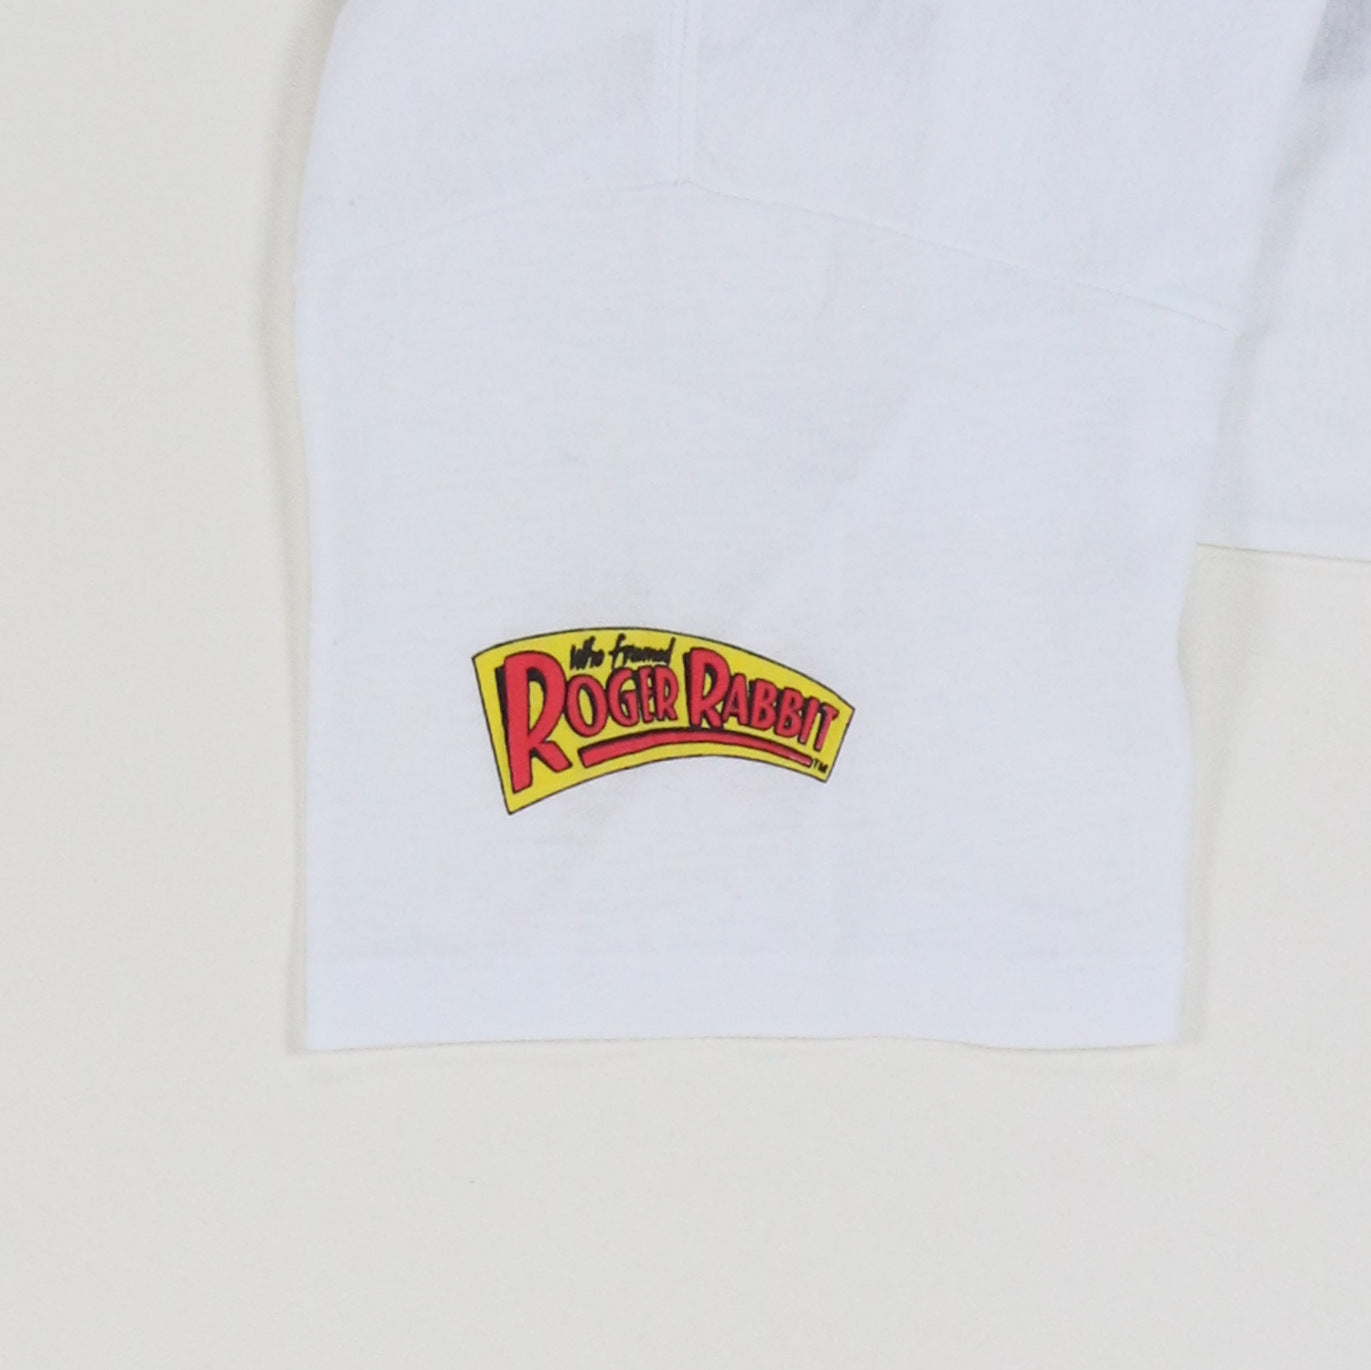 1987 Roger Rabbit DOOM Shirt